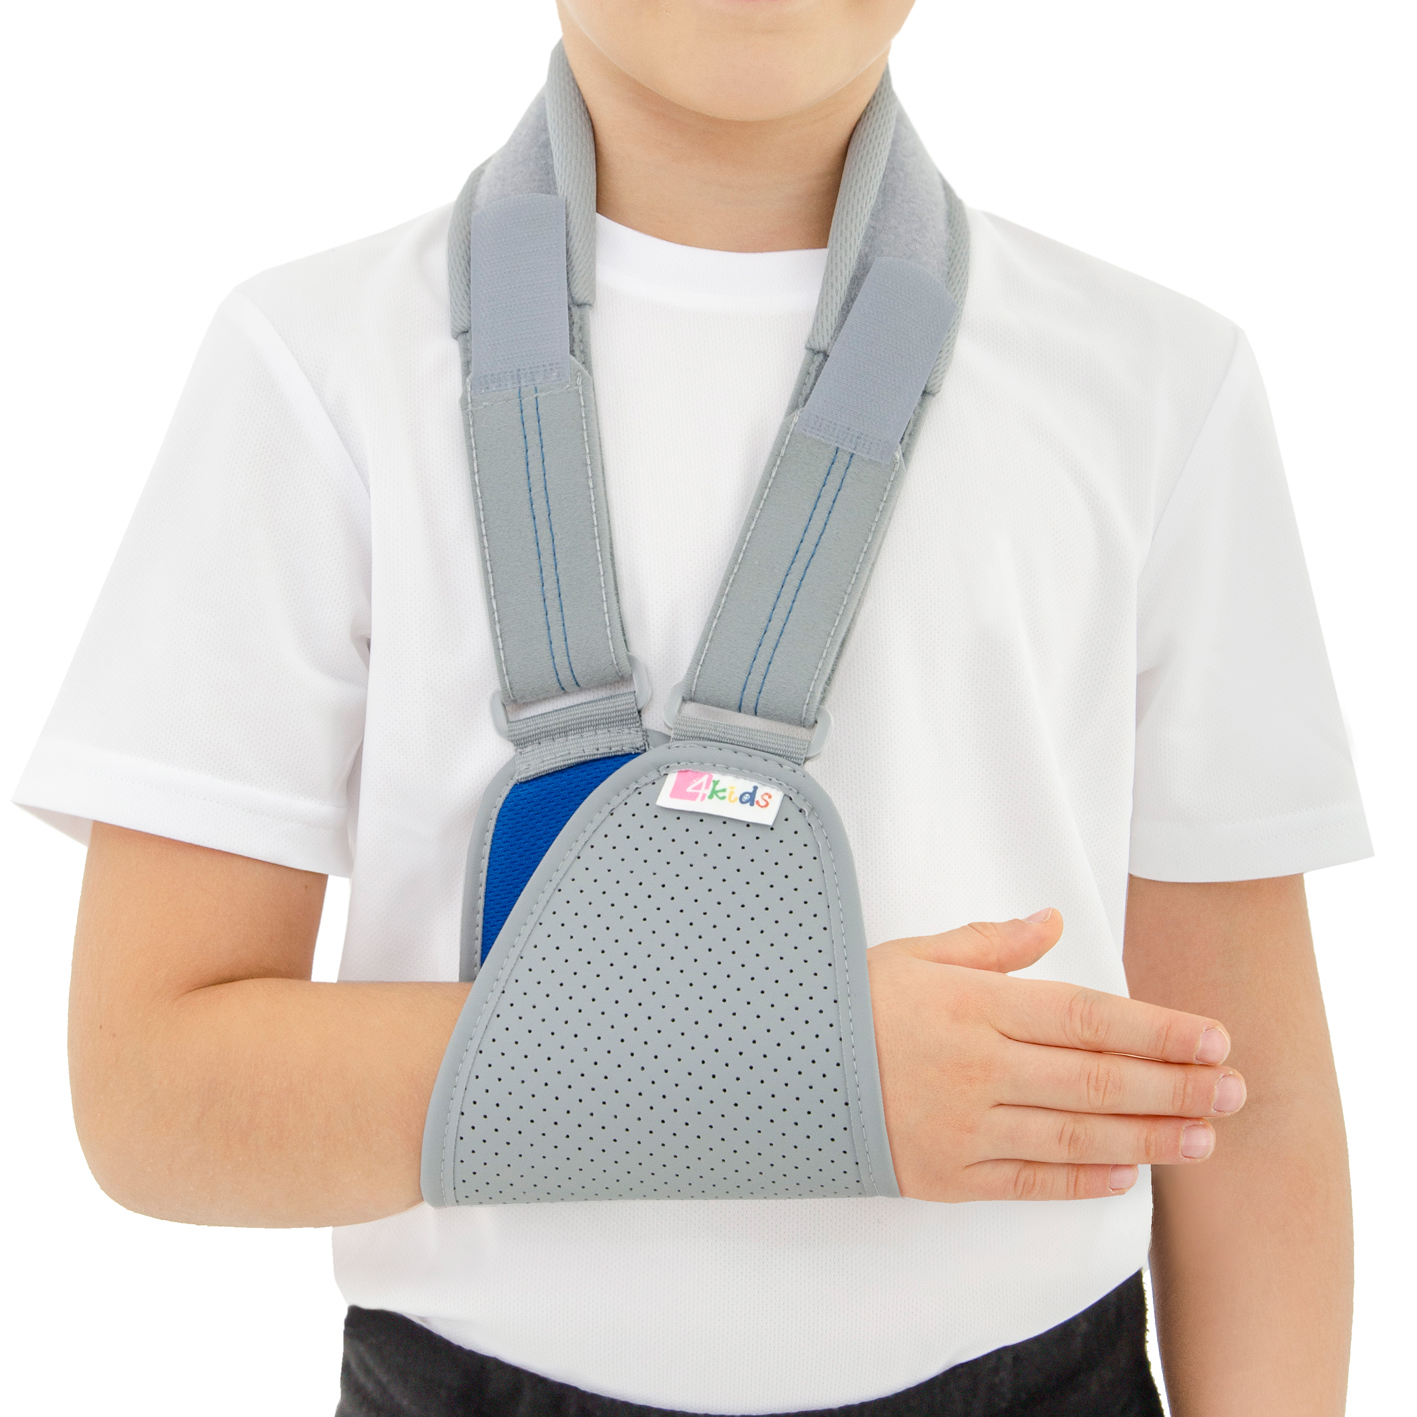 One size sling shoulder brace OKG-01